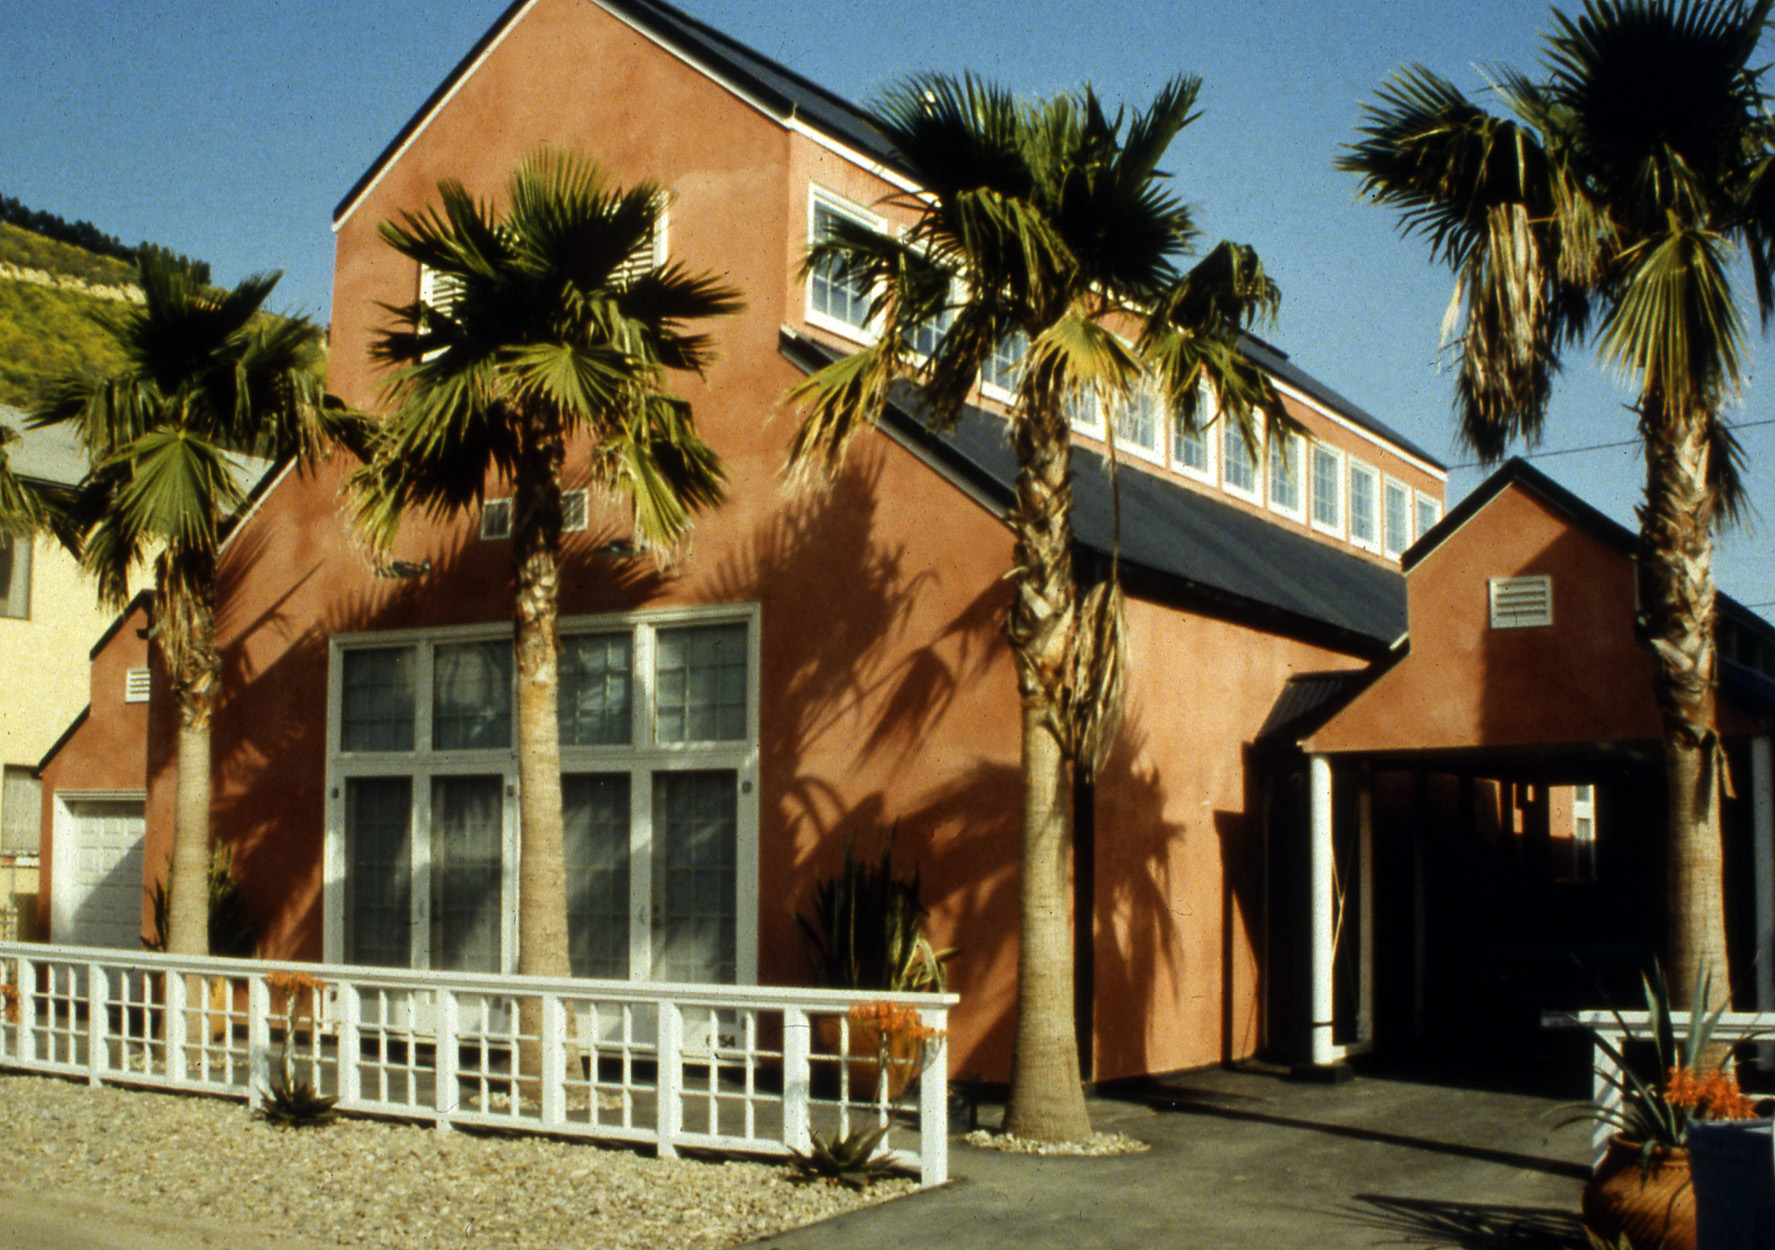 Roger Brown Residence, La Conchita, CA; architect Stanley Tigerman, 1988.